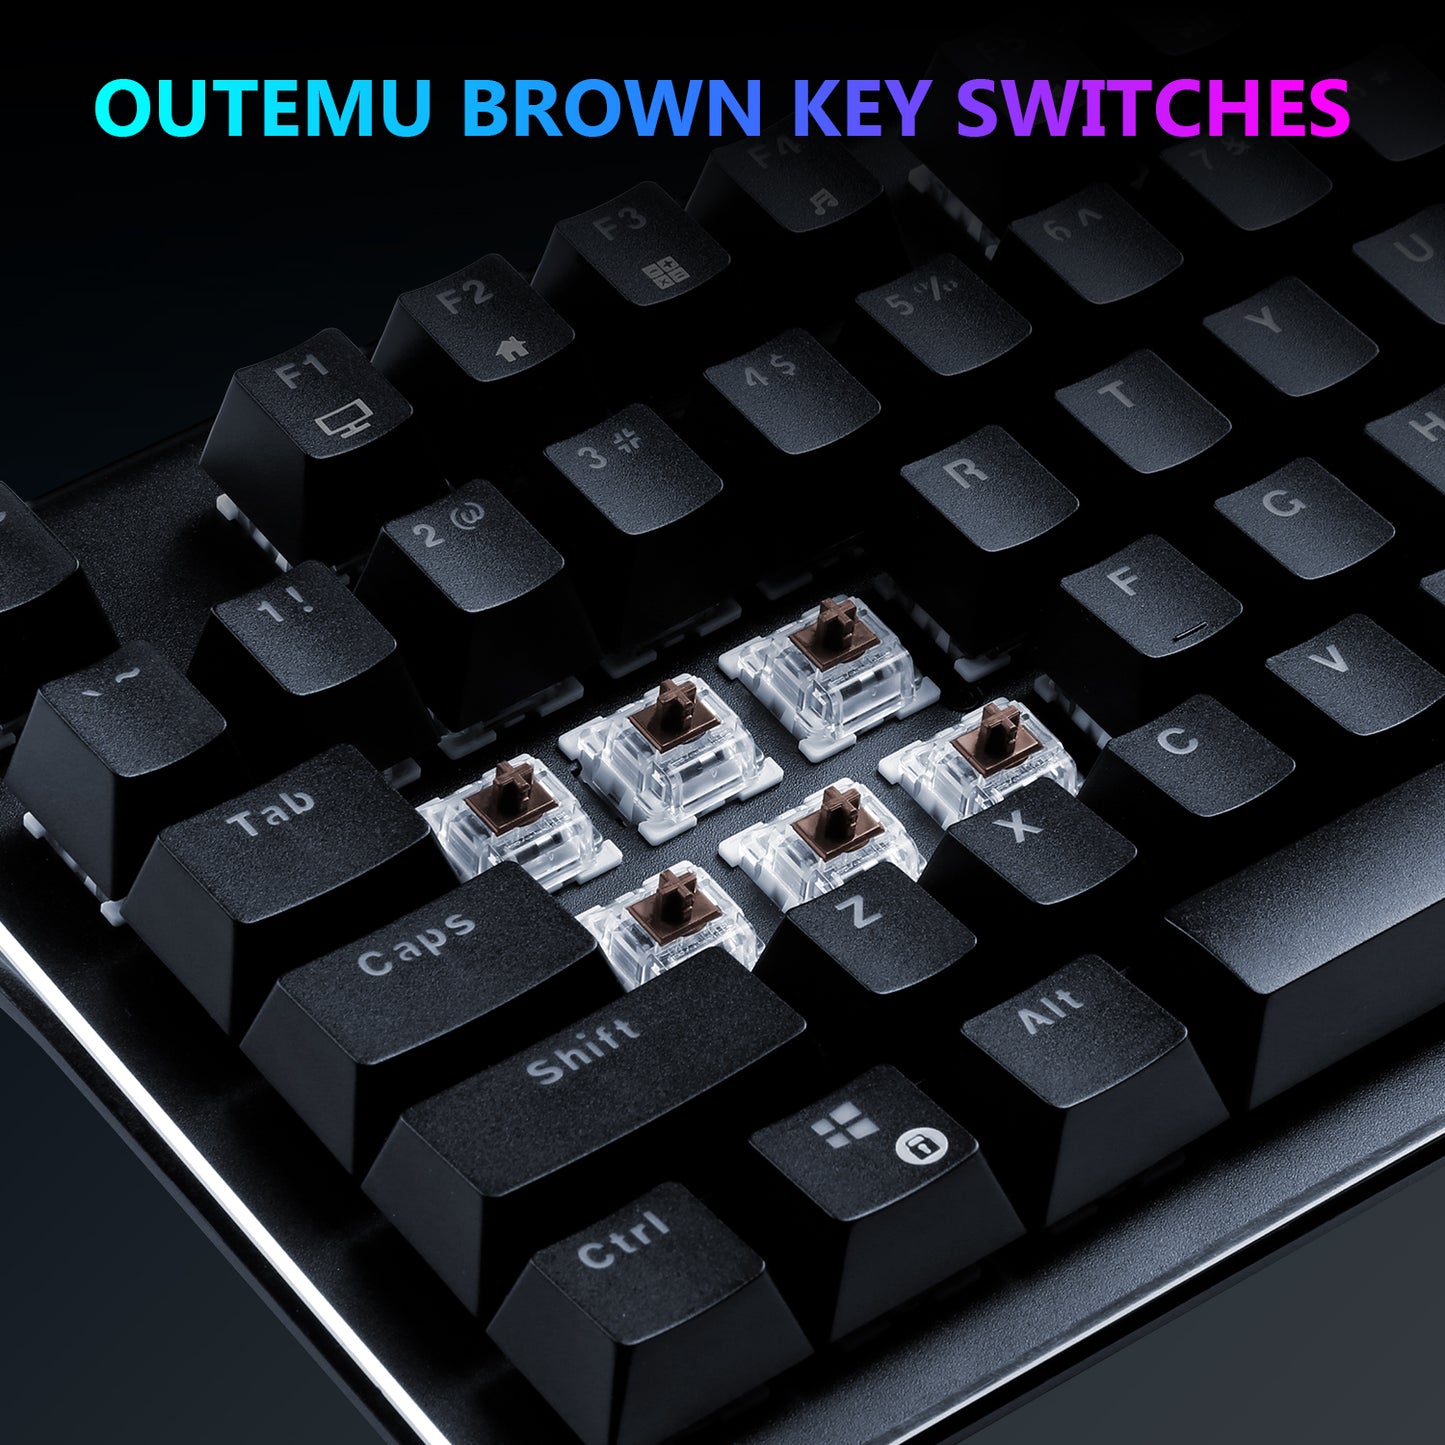 Z-EDGE UK108 108 Keys RGB Optical Mechanical Gaming Keyboard